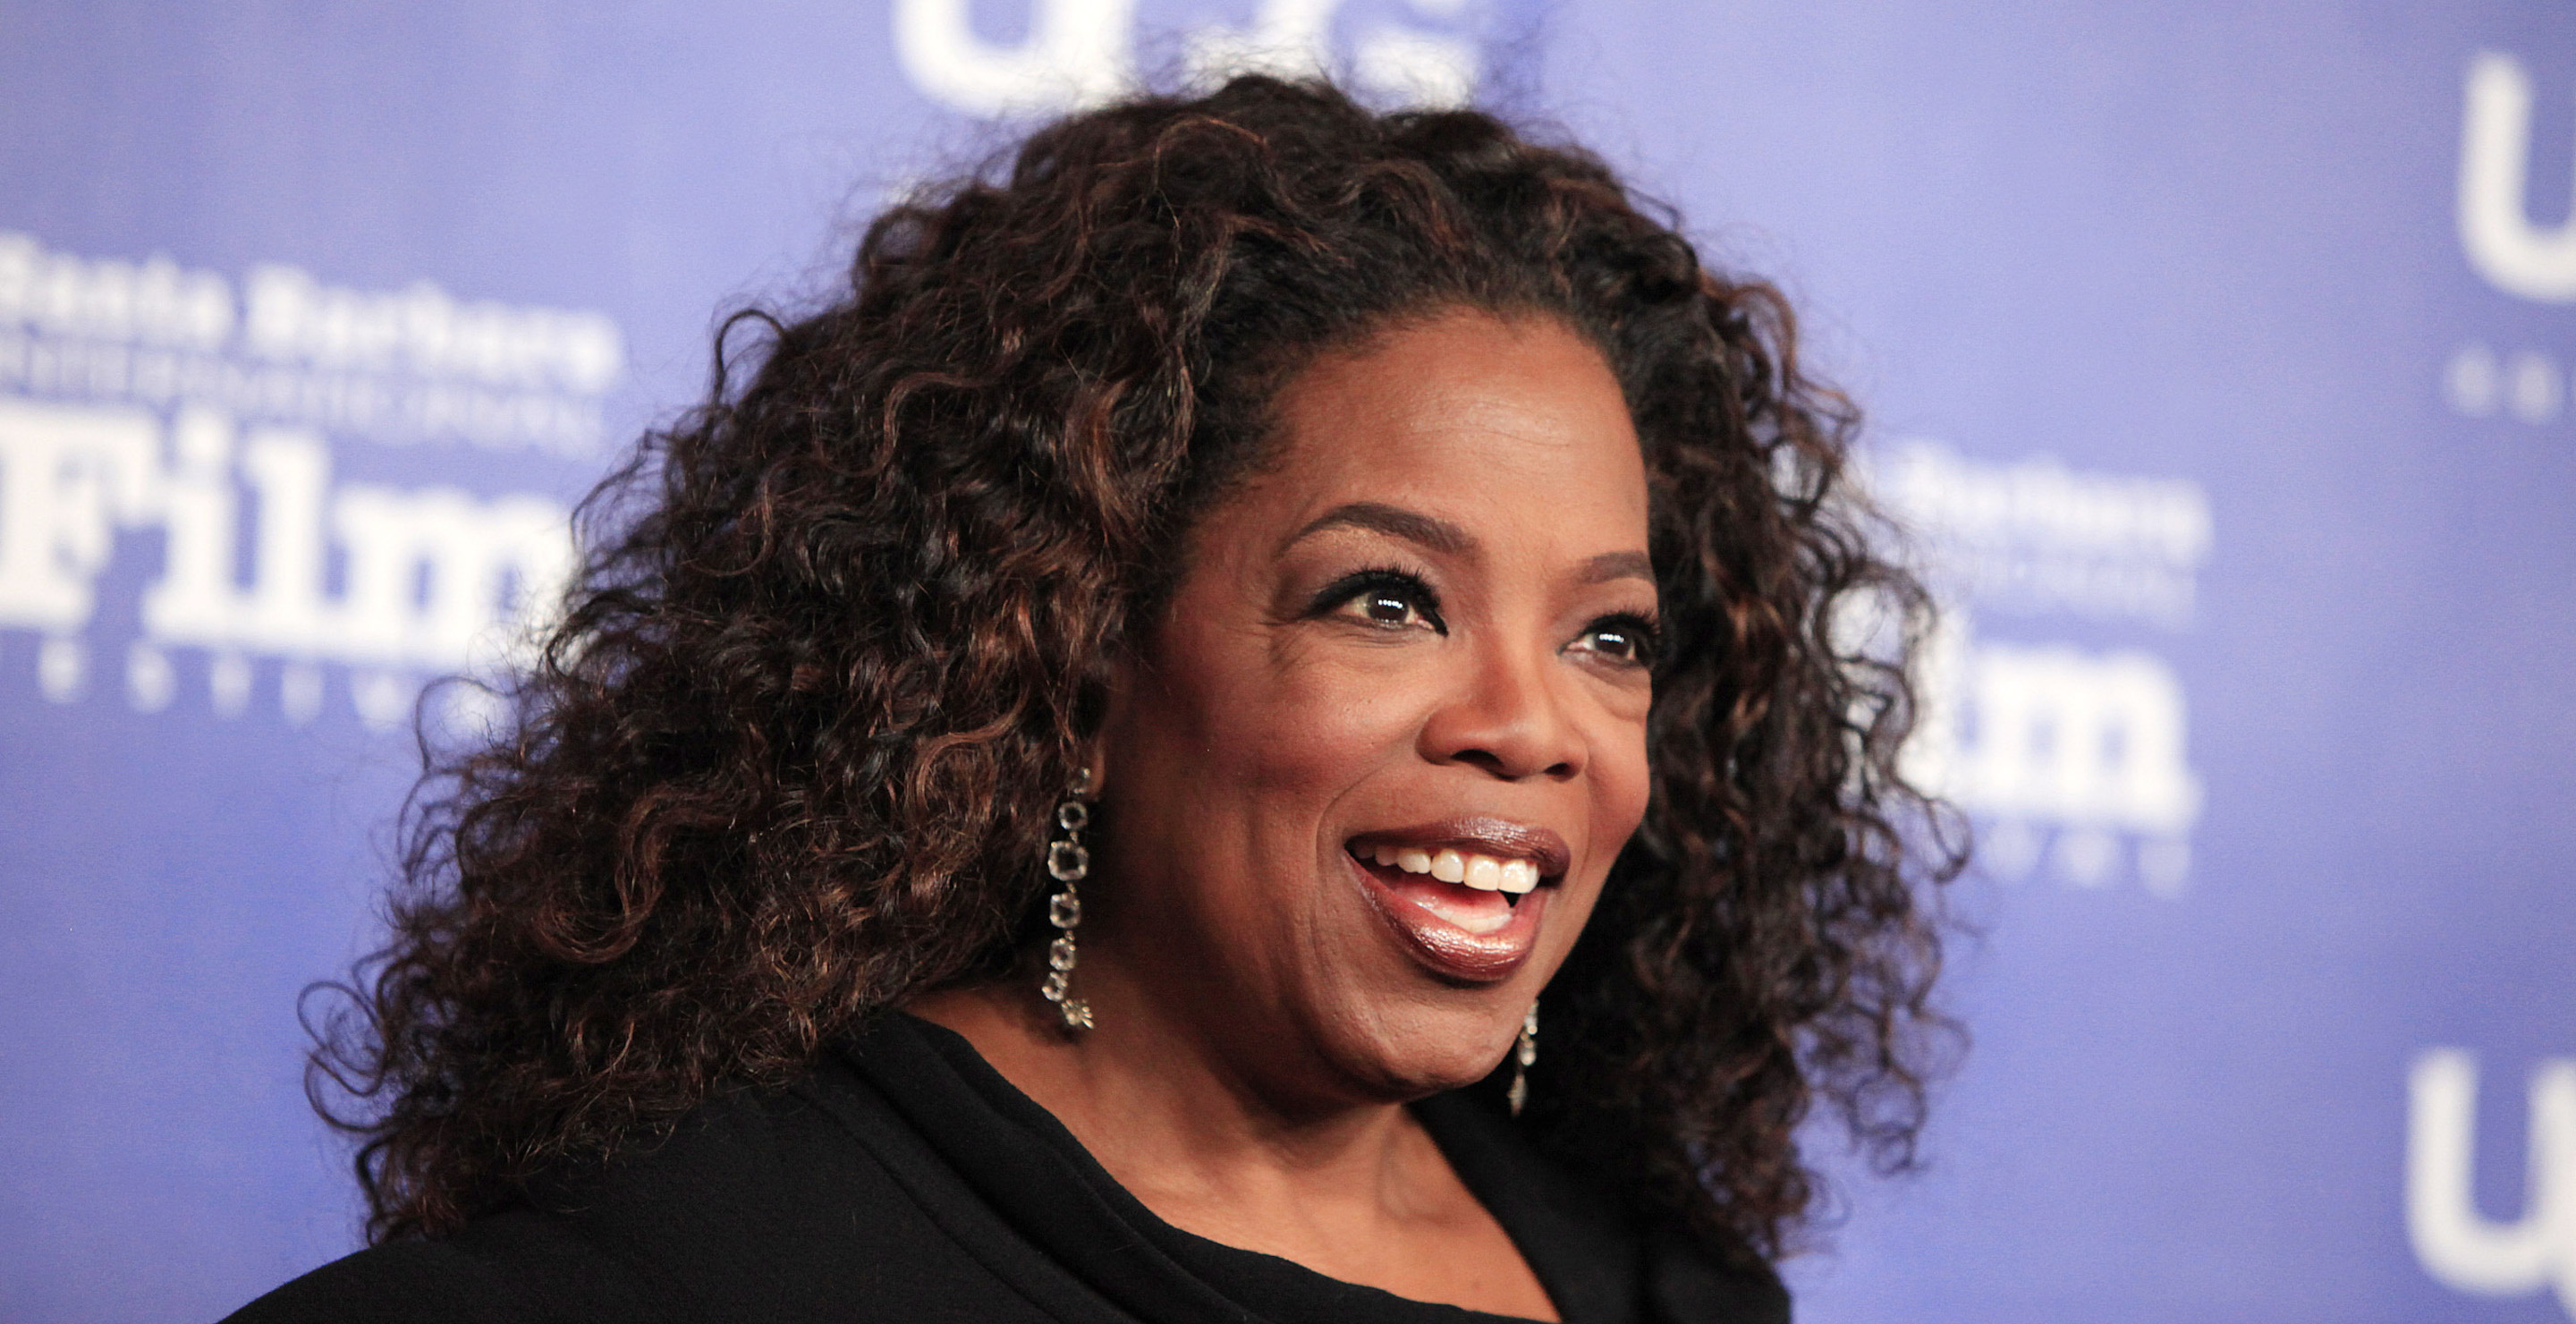 Oprah Winfrey And Gayle King Break Silence On Decades-Long Relationship Rumors